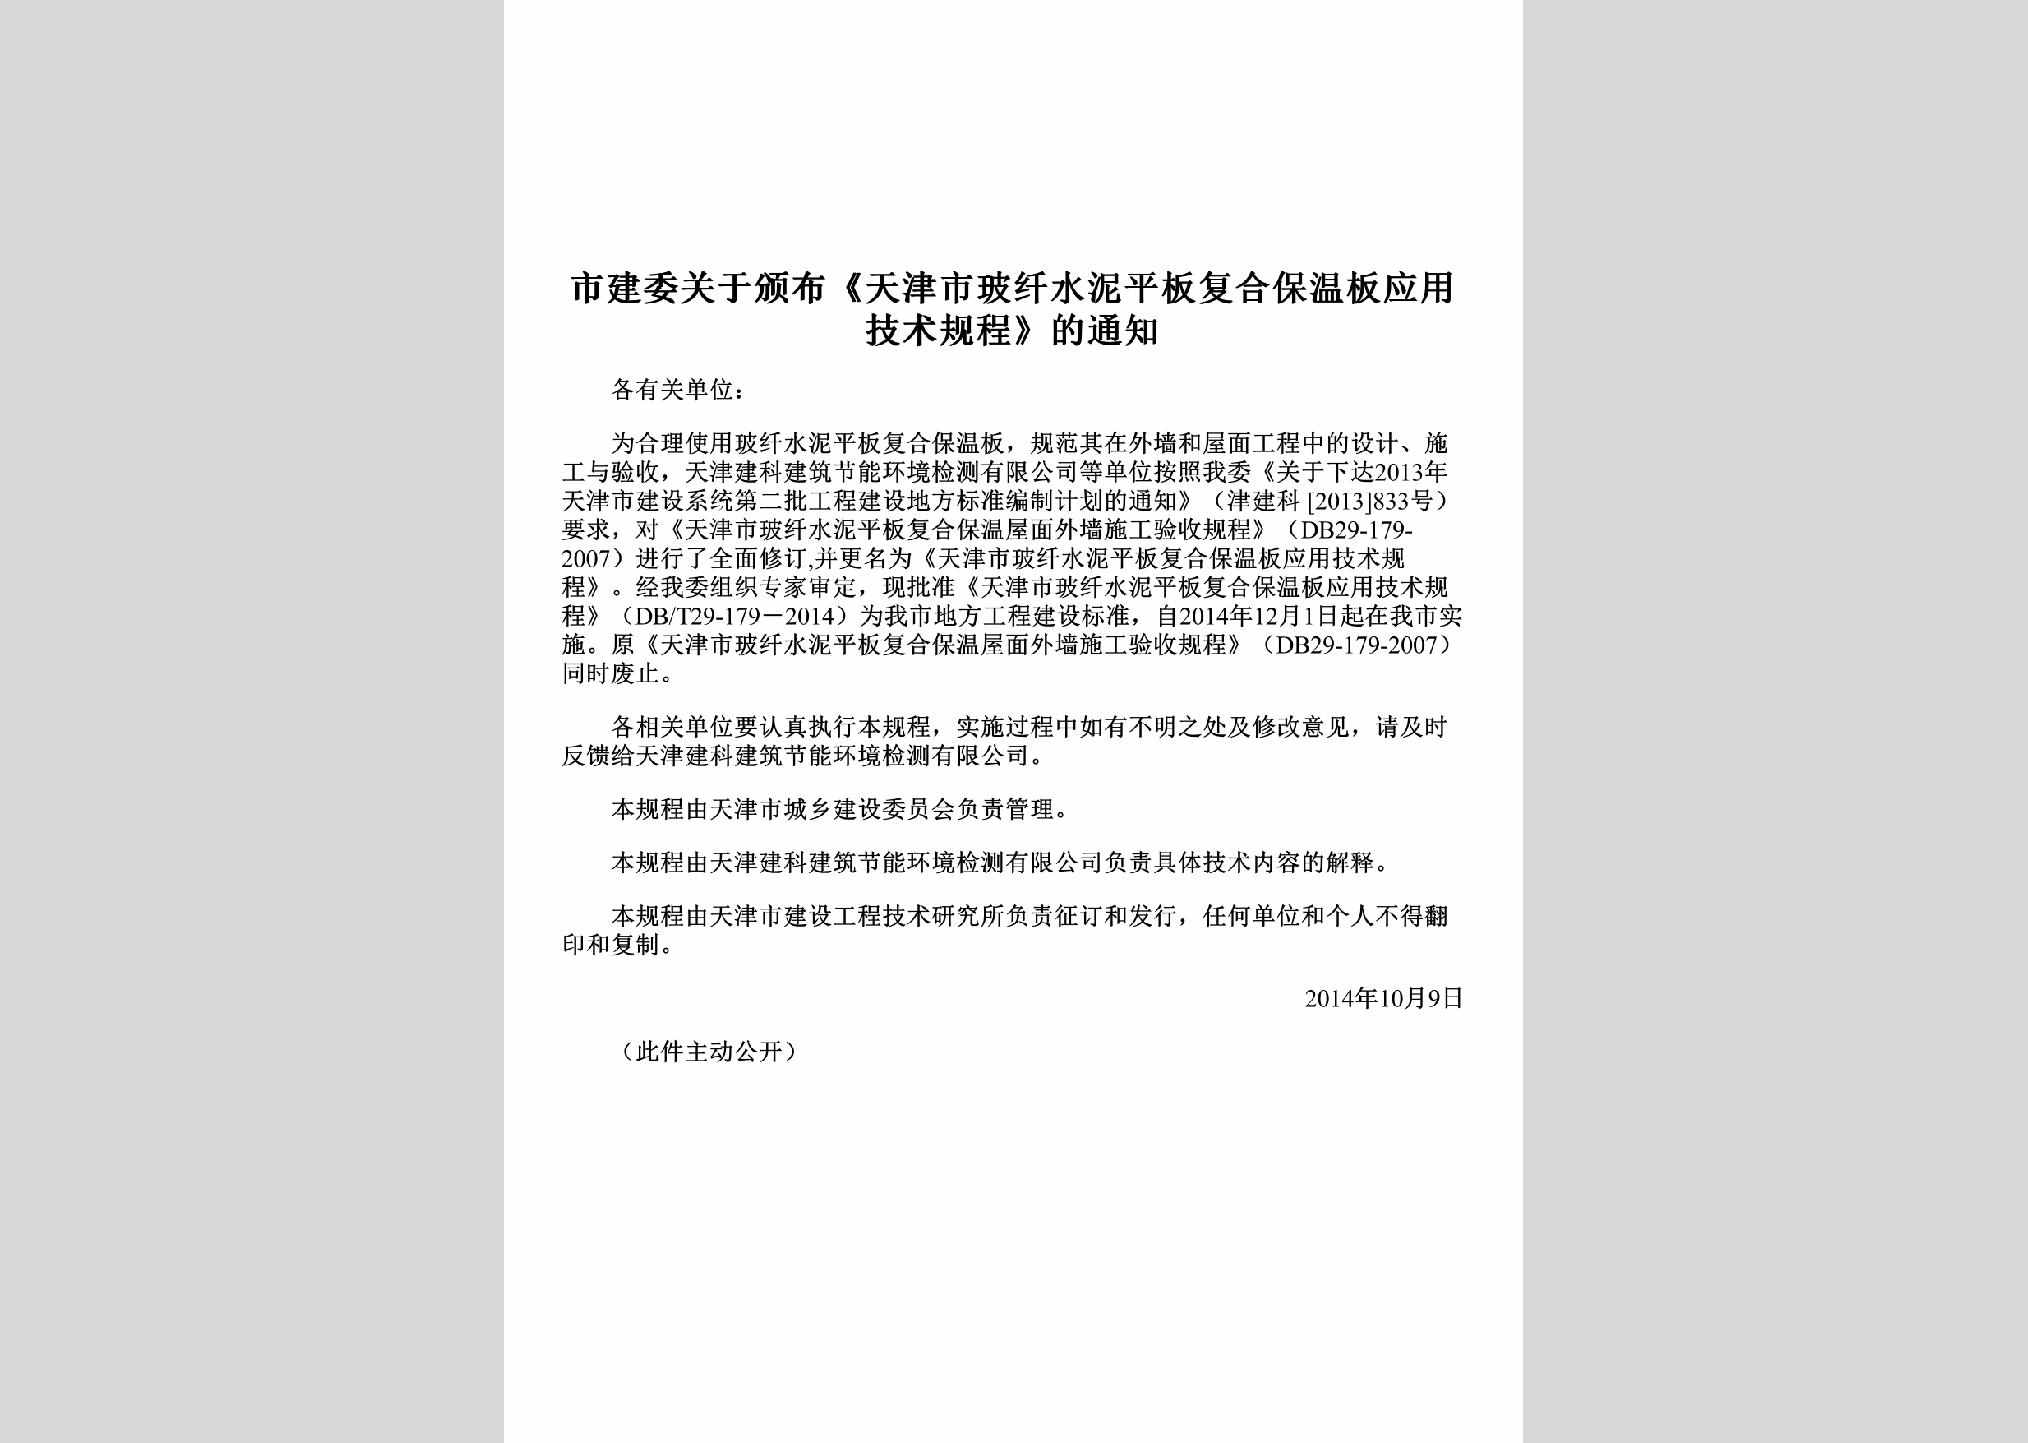 TJ-GYFBTJS-2014：关于颁布《天津市玻纤水泥平板复合保温板应用技术规程》的通知